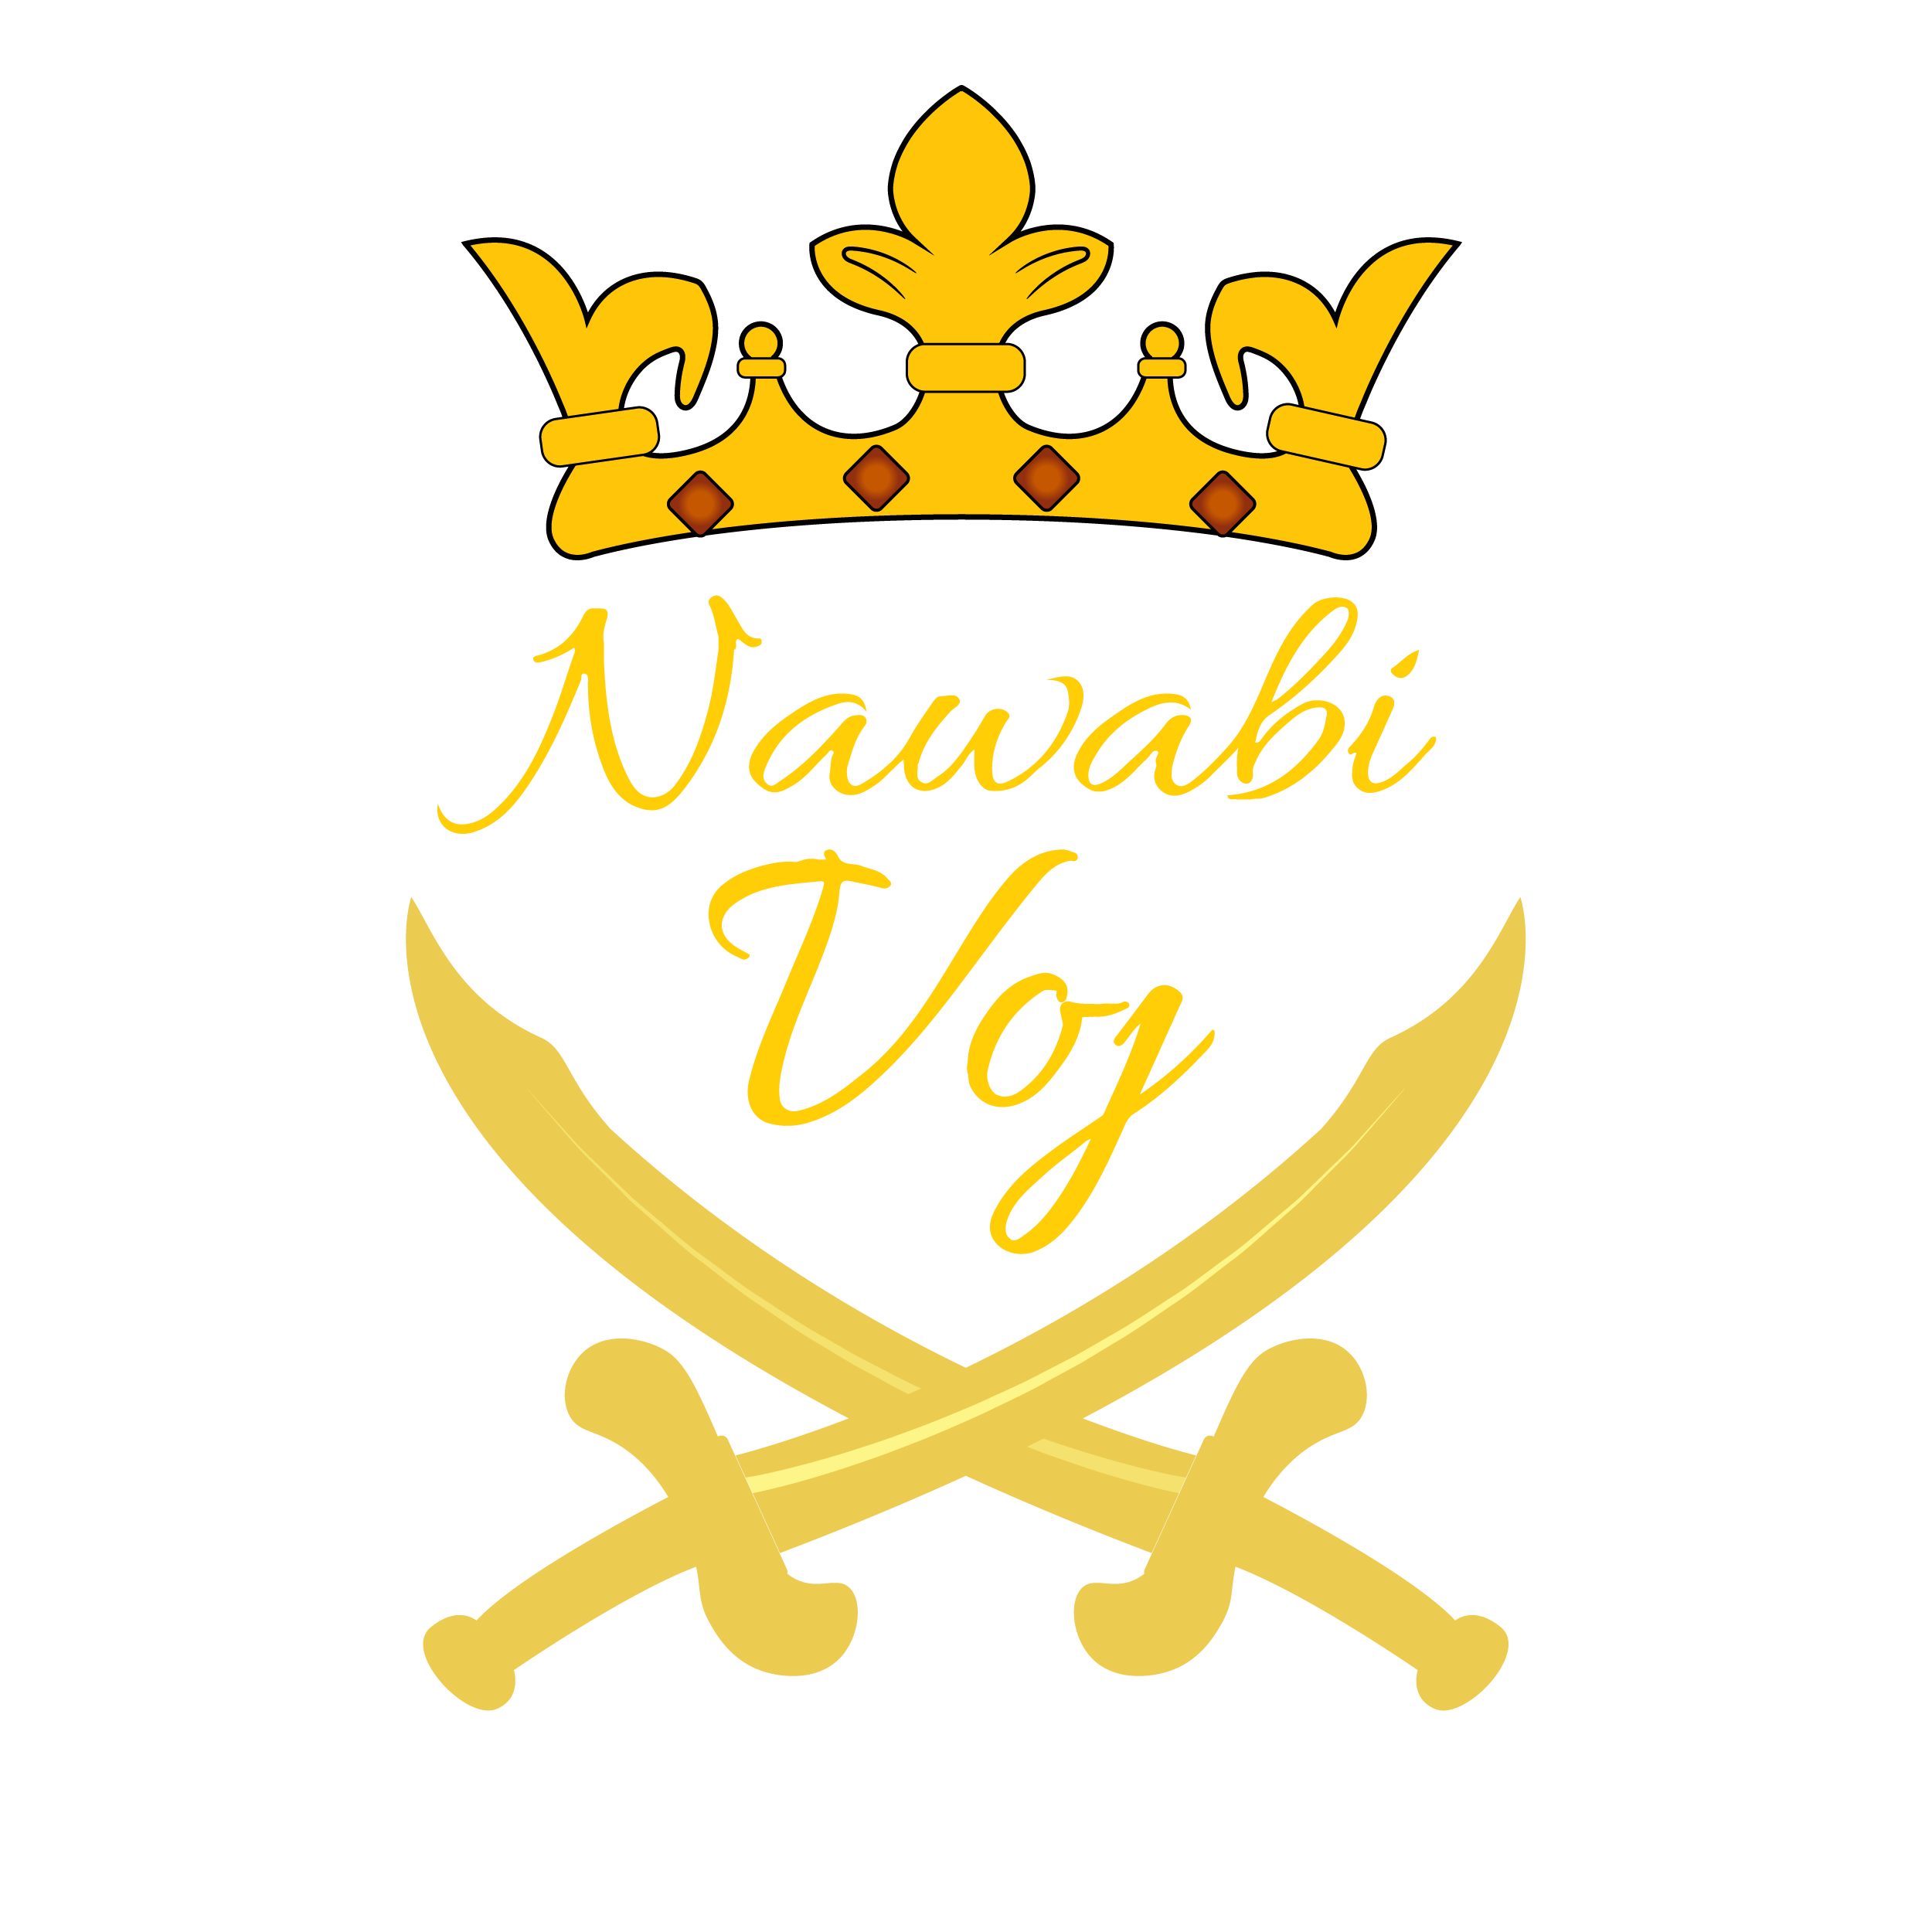 Nawabi Voj Indian Restaurant Stonehaven logo